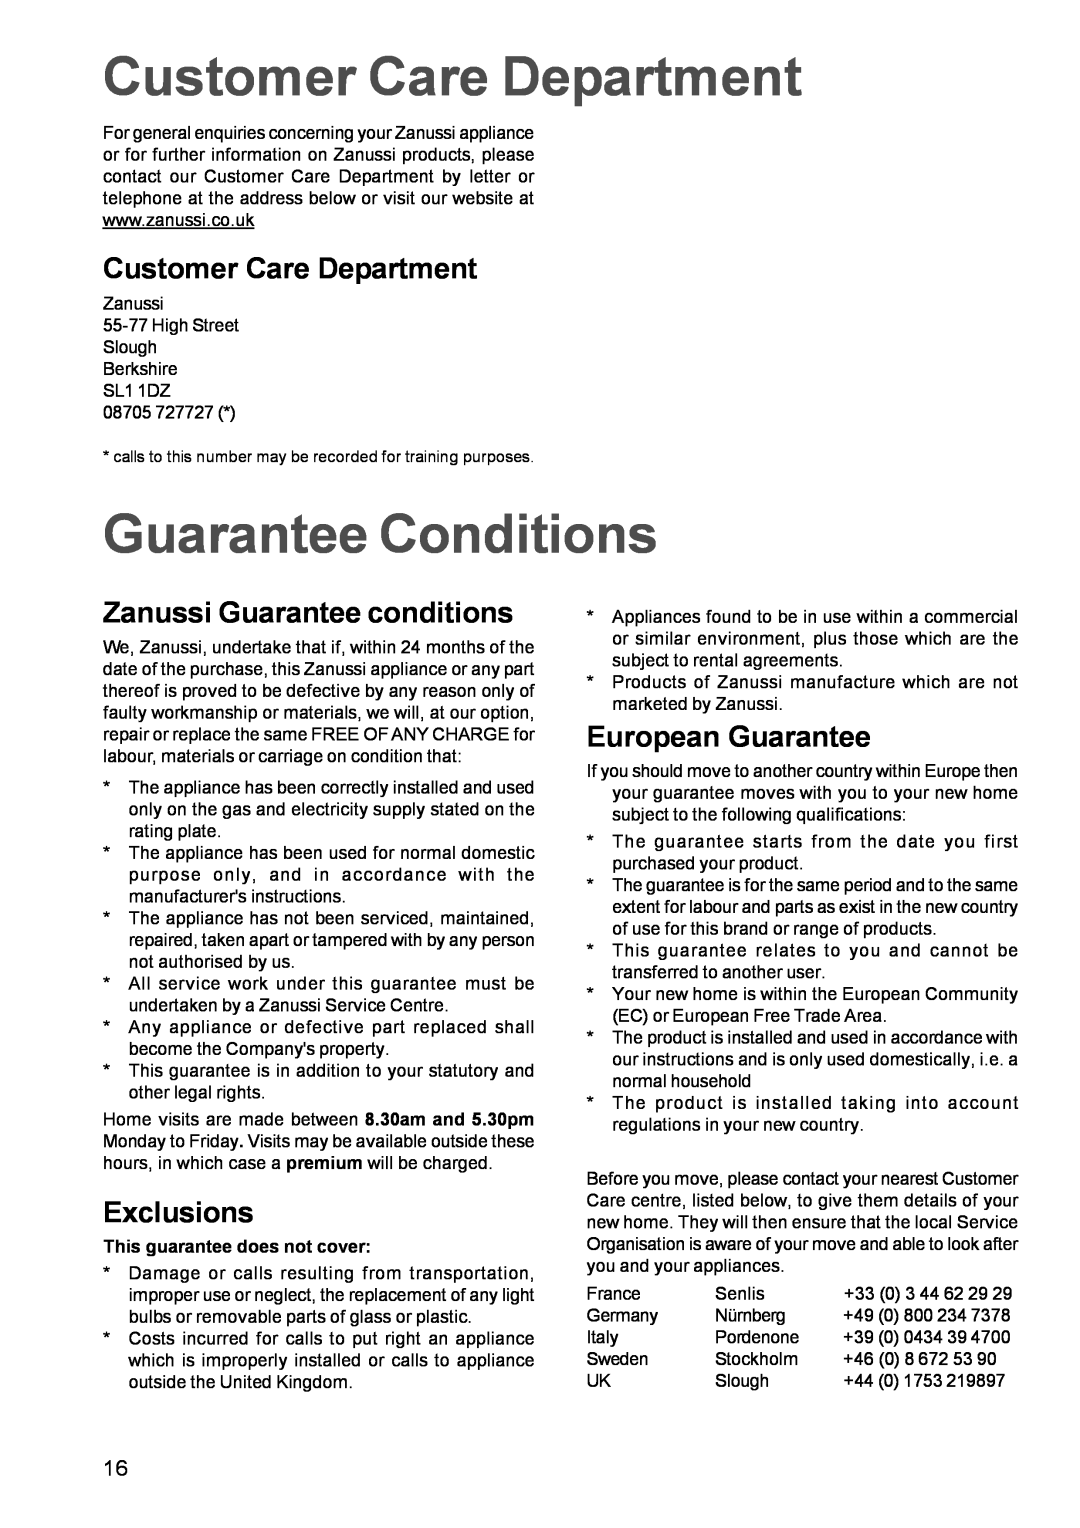 Zanussi ZBQ 365 manual Customer Care Department, Guarantee Conditions, Zanussi Guarantee conditions, Exclusions 